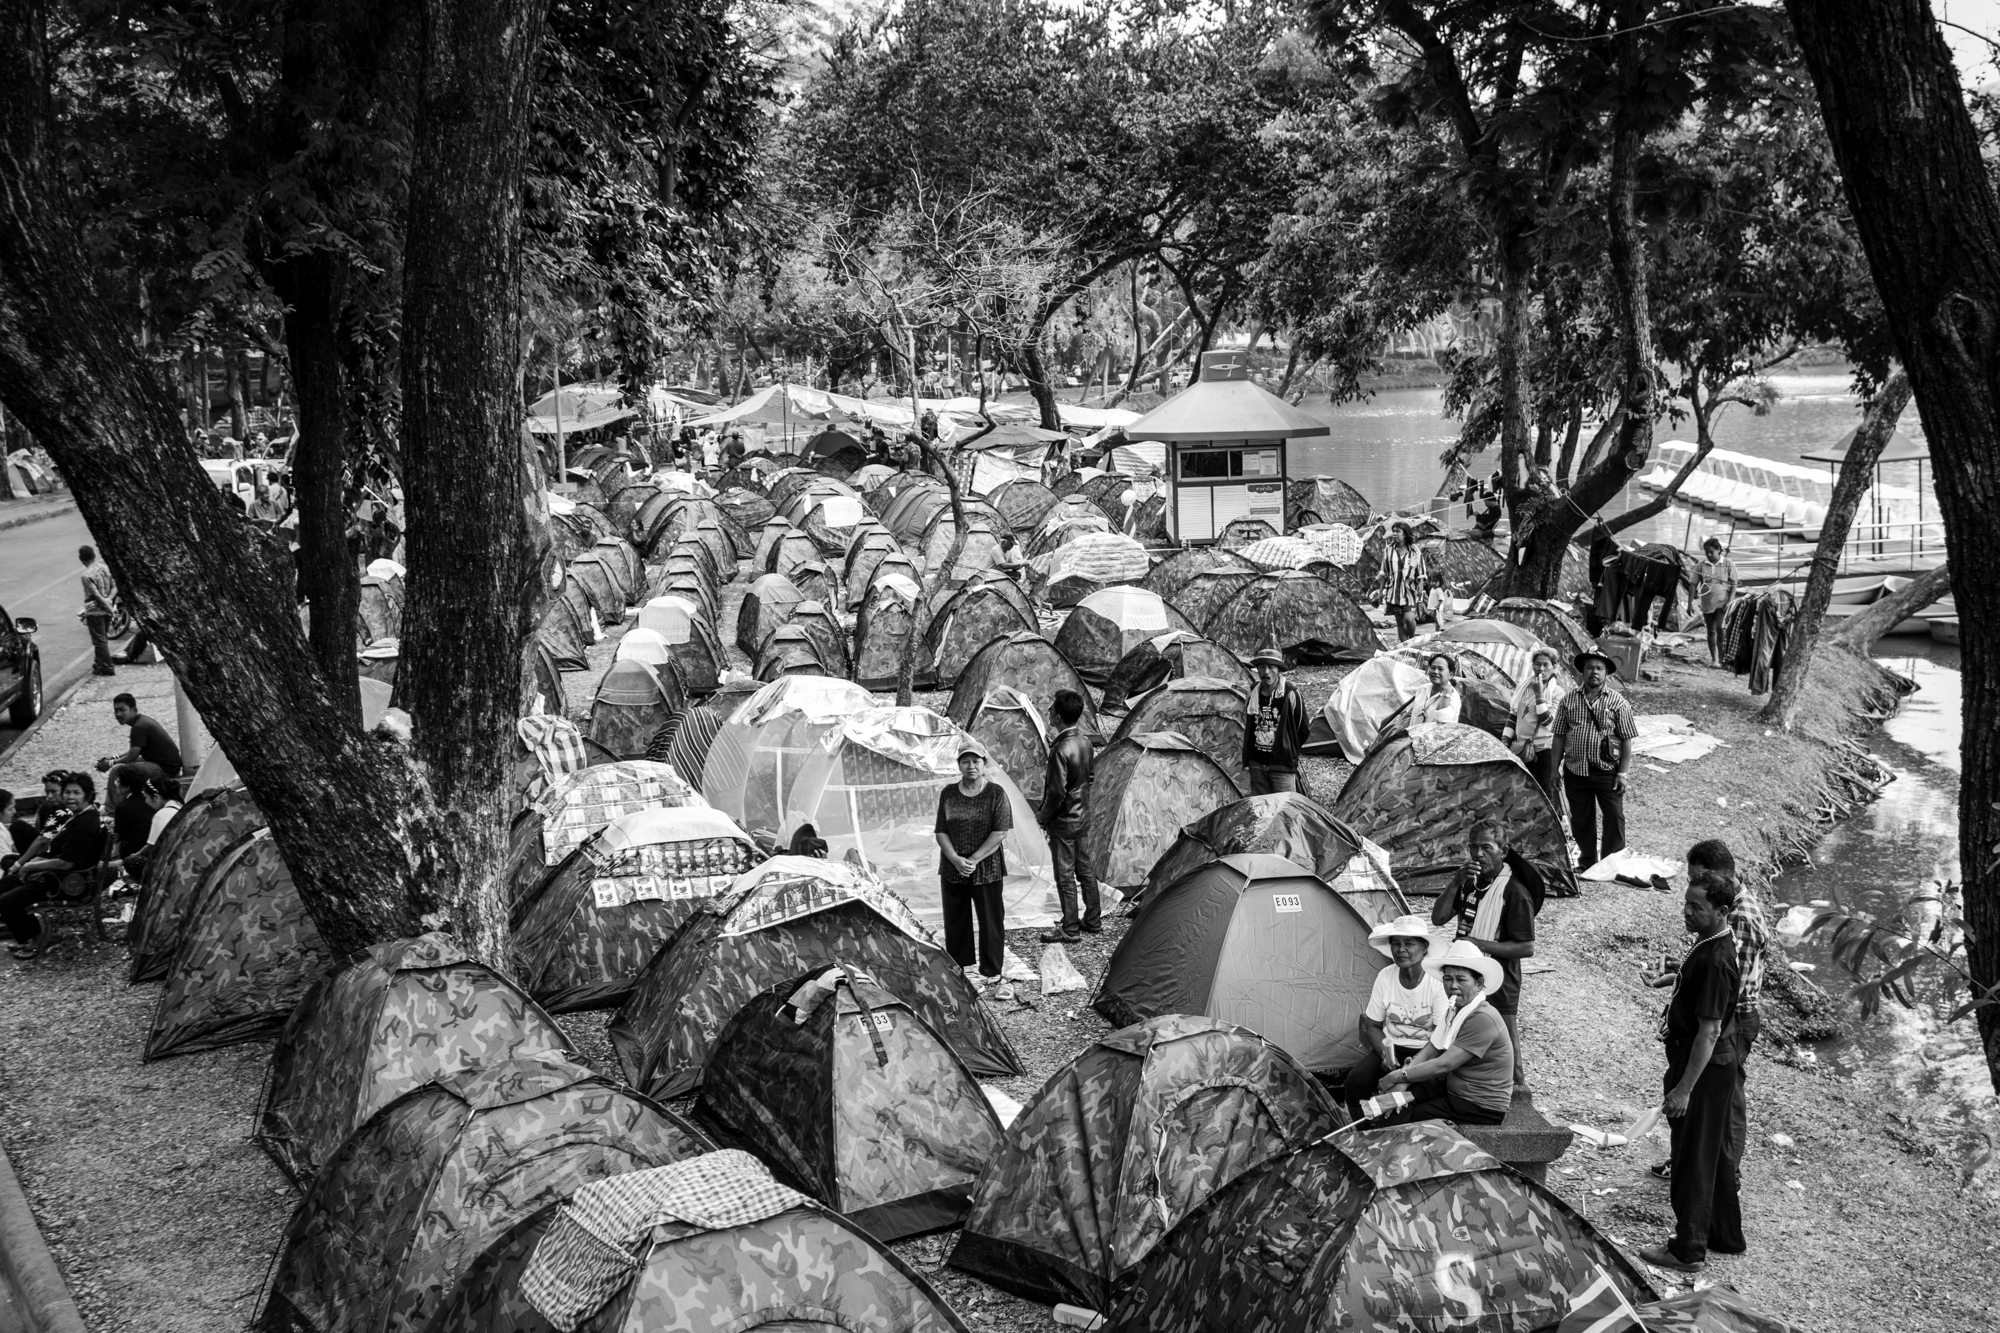 Shutdown Bangkok -  Part of the PDRC camp in Lumpini park, downtown Bangkok. 